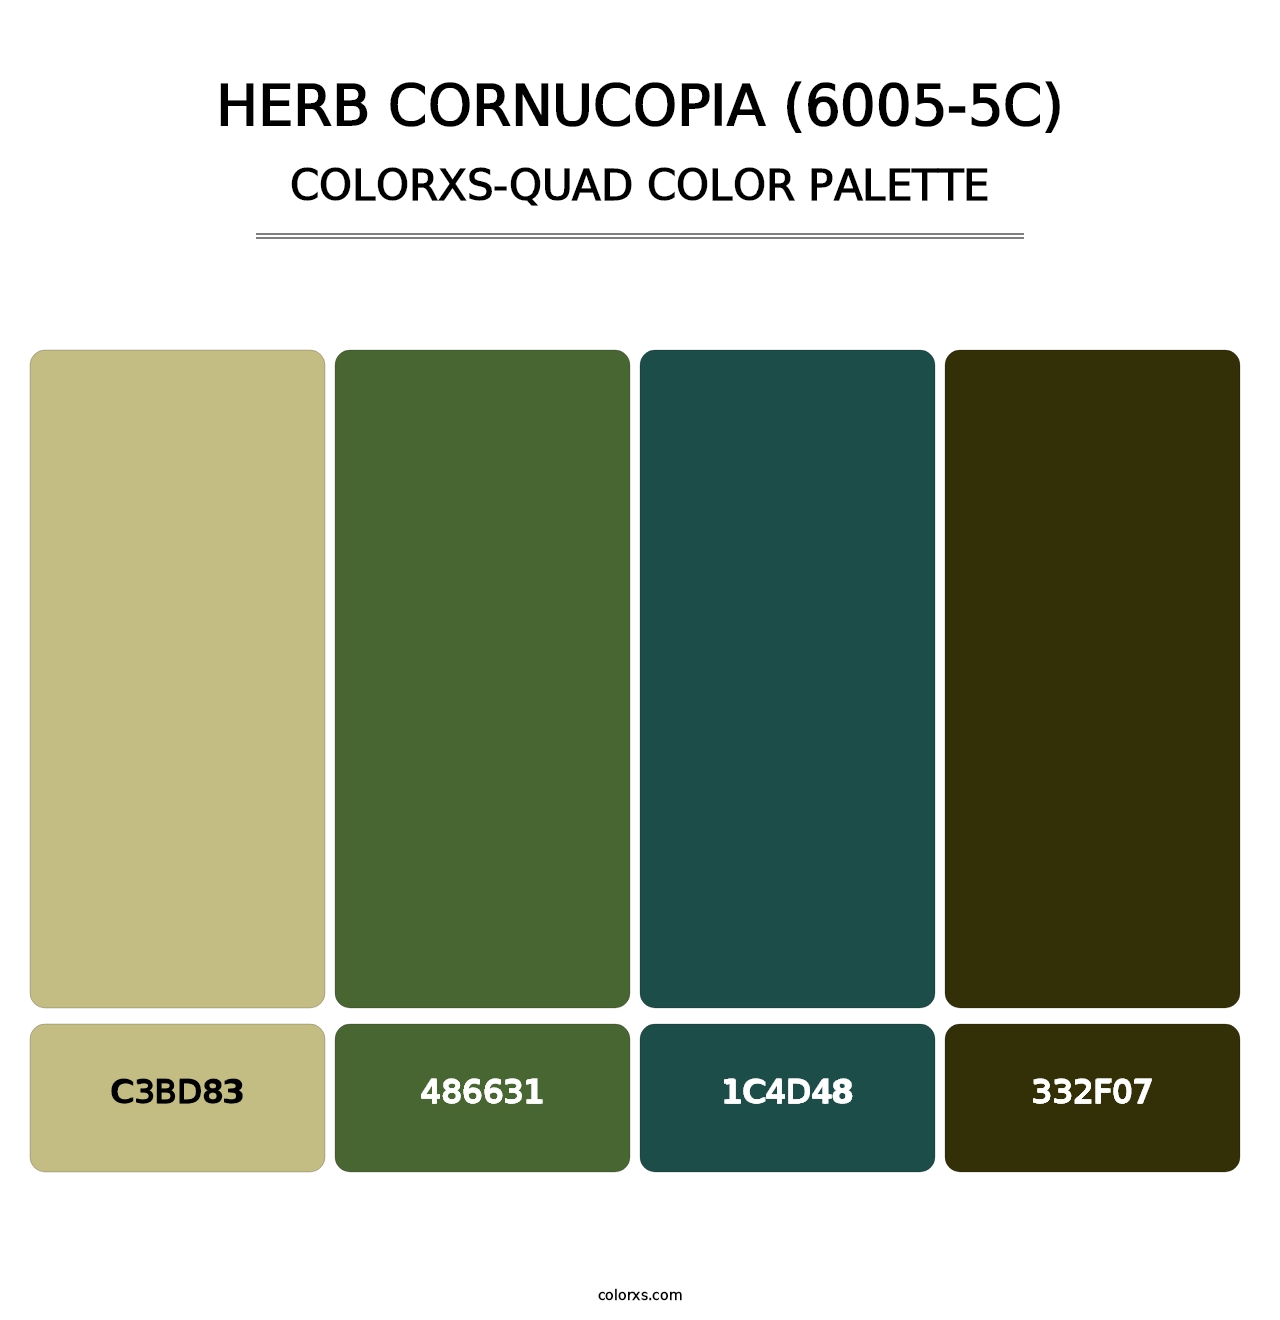 Herb Cornucopia (6005-5C) - Colorxs Quad Palette